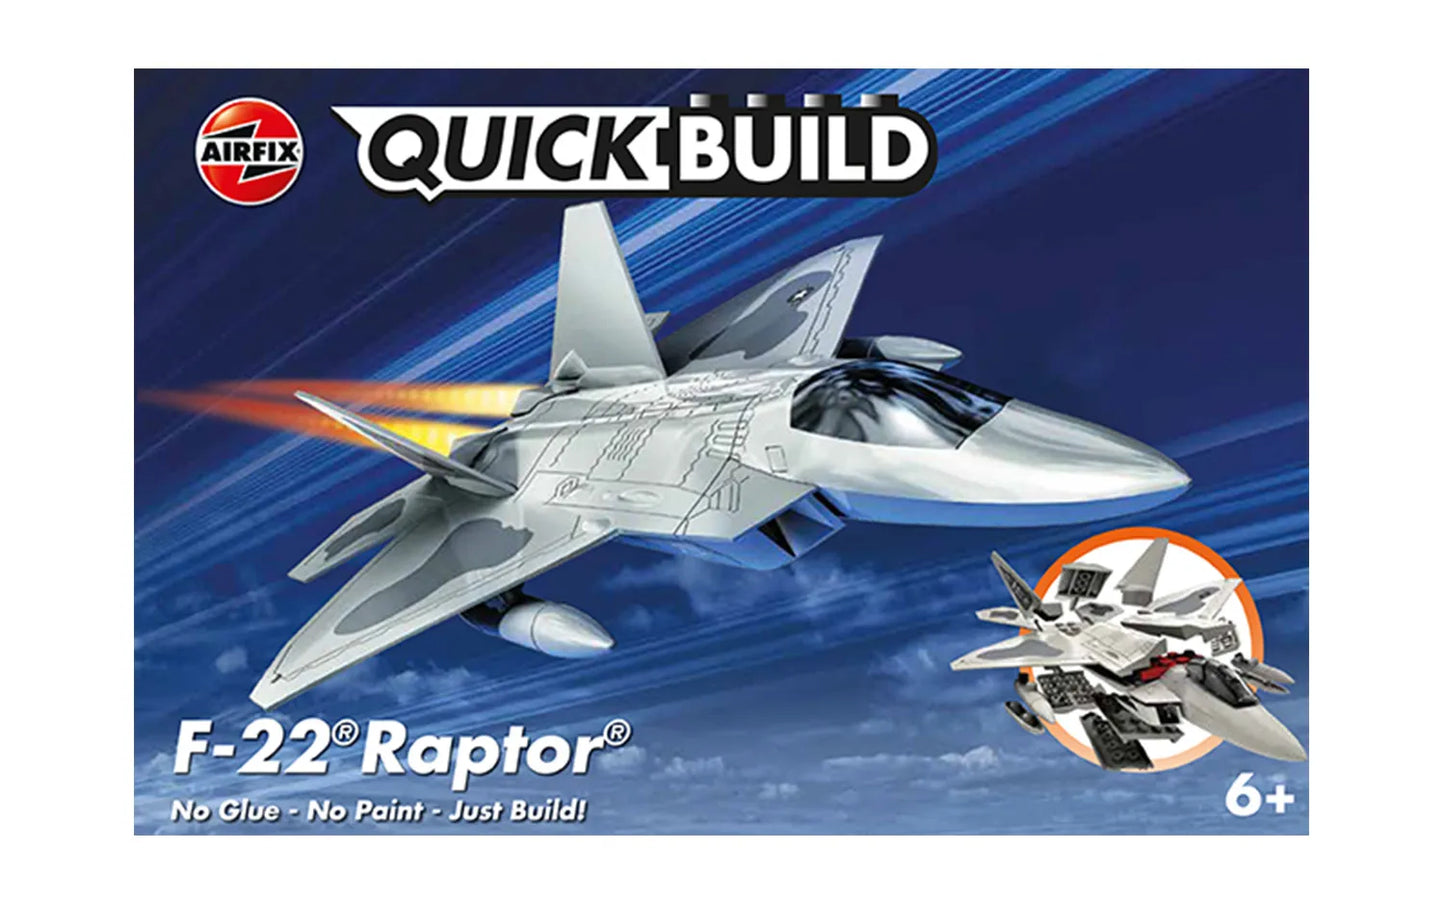 Airfix Quick Build - J6005 - F22 Raptor